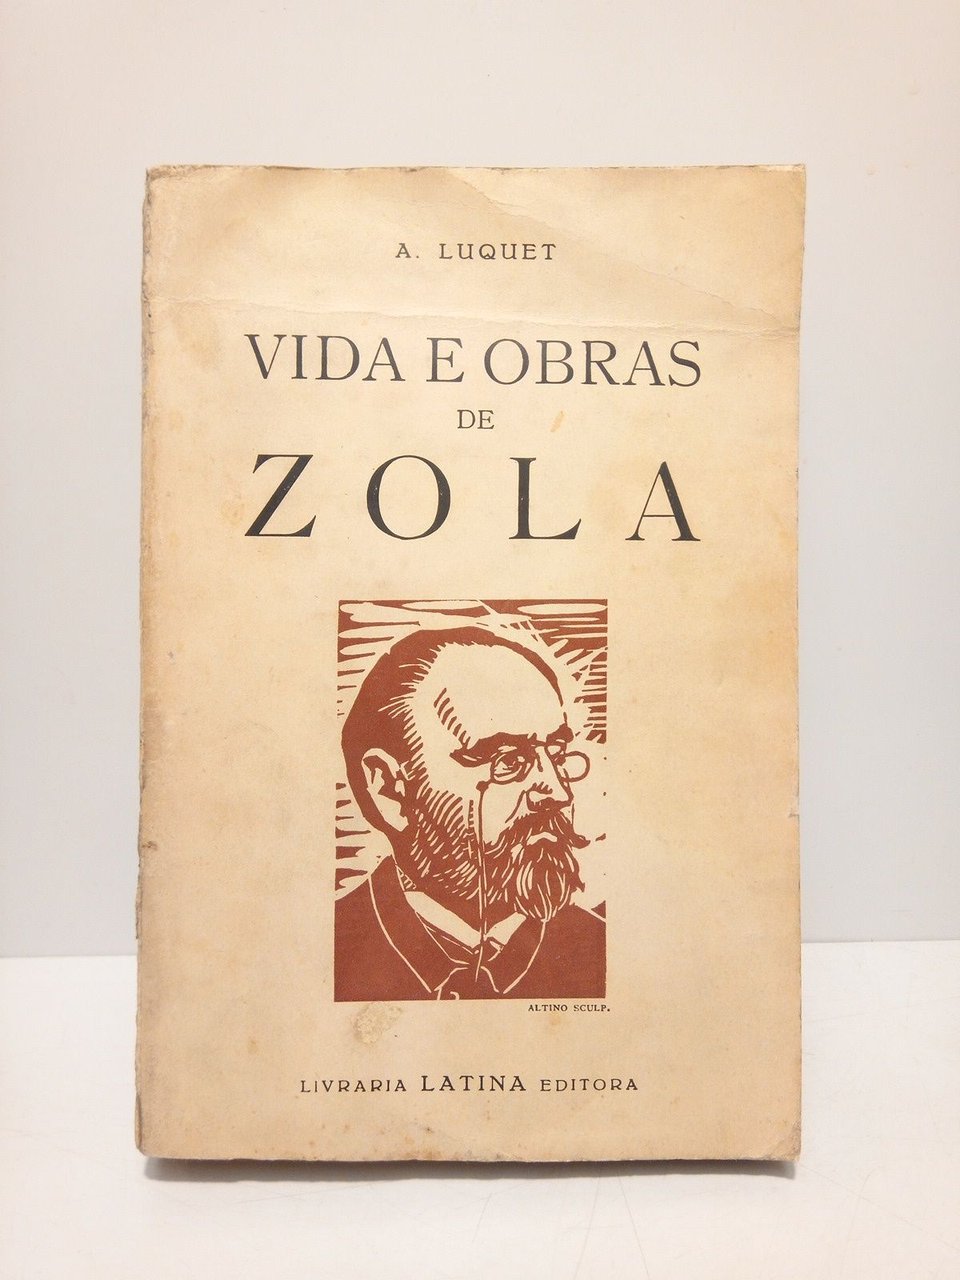 Vida e obras de Zola